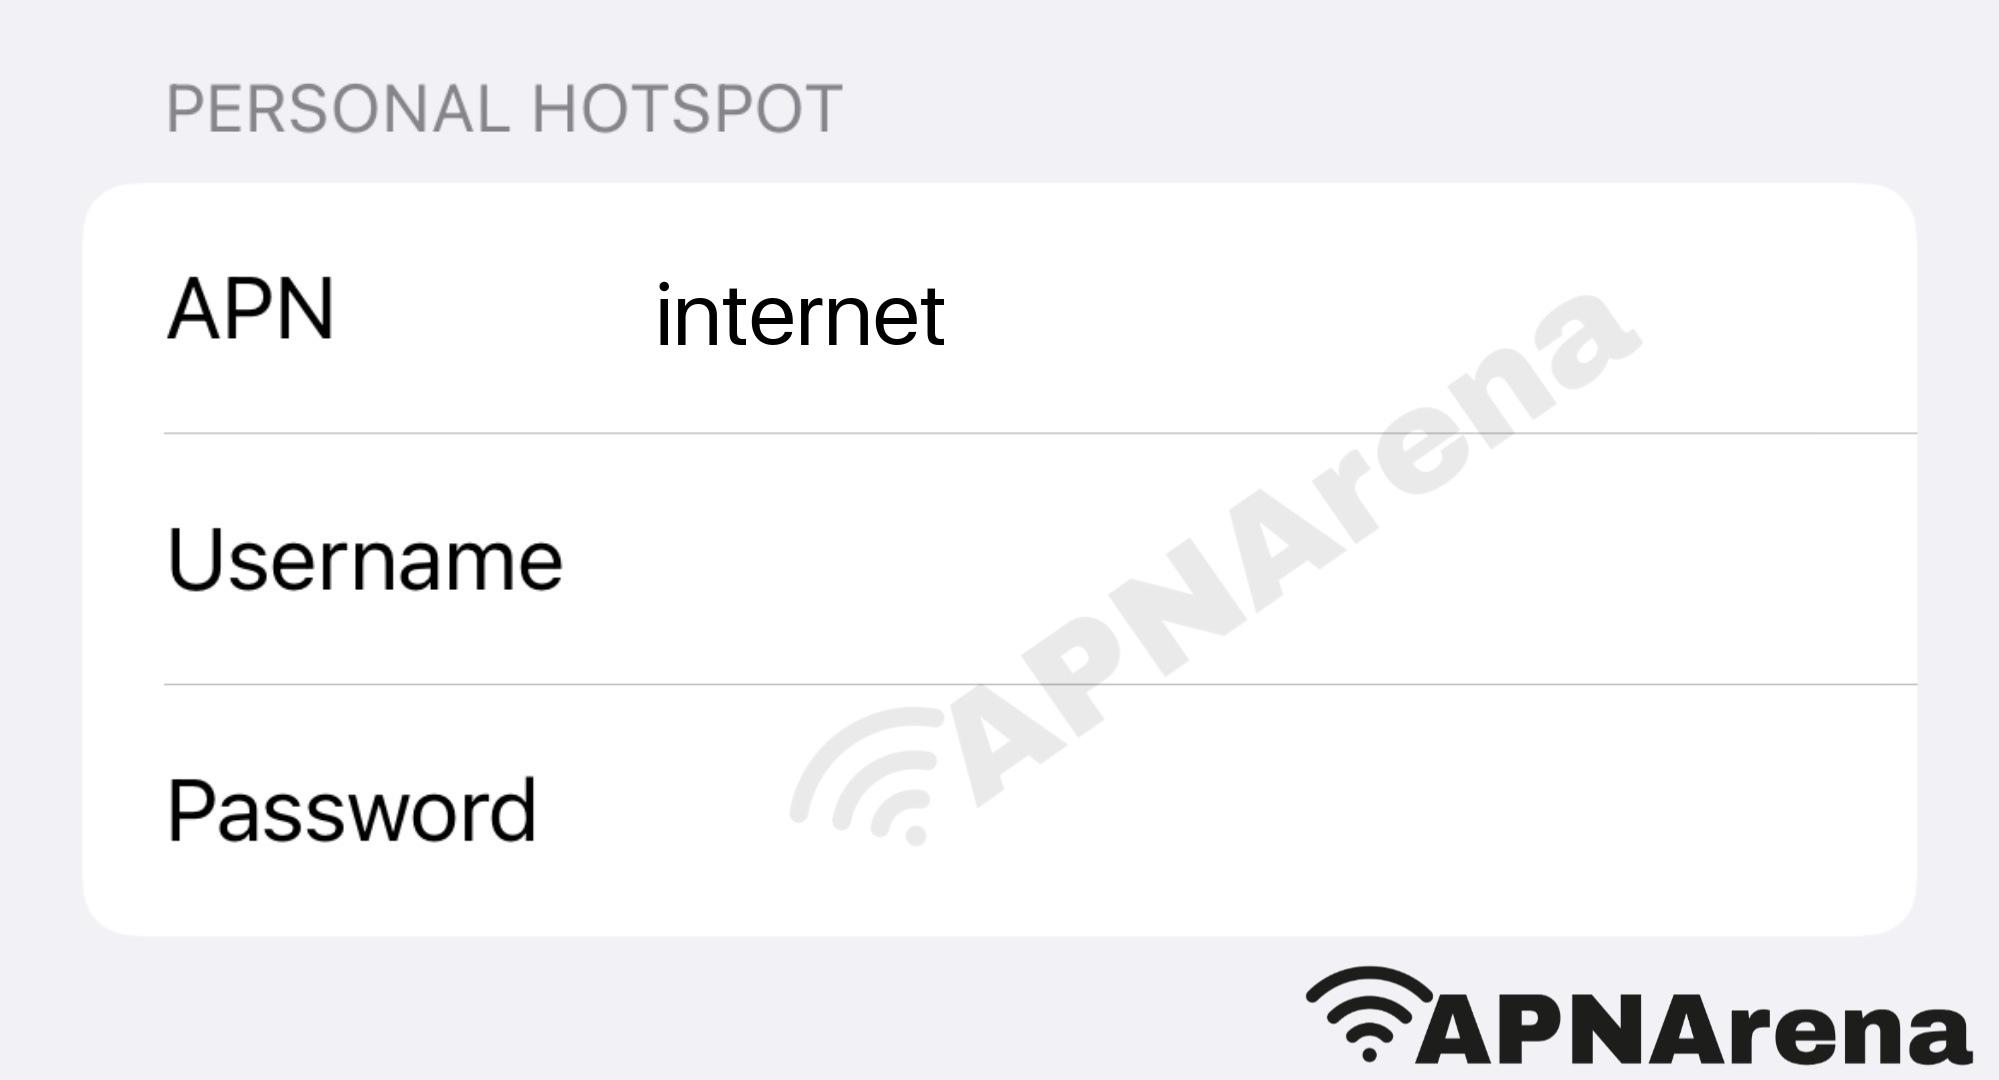 AIS AWN (Advance Info Service, Advance Wireless Network) Personal Hotspot Settings for iPhone